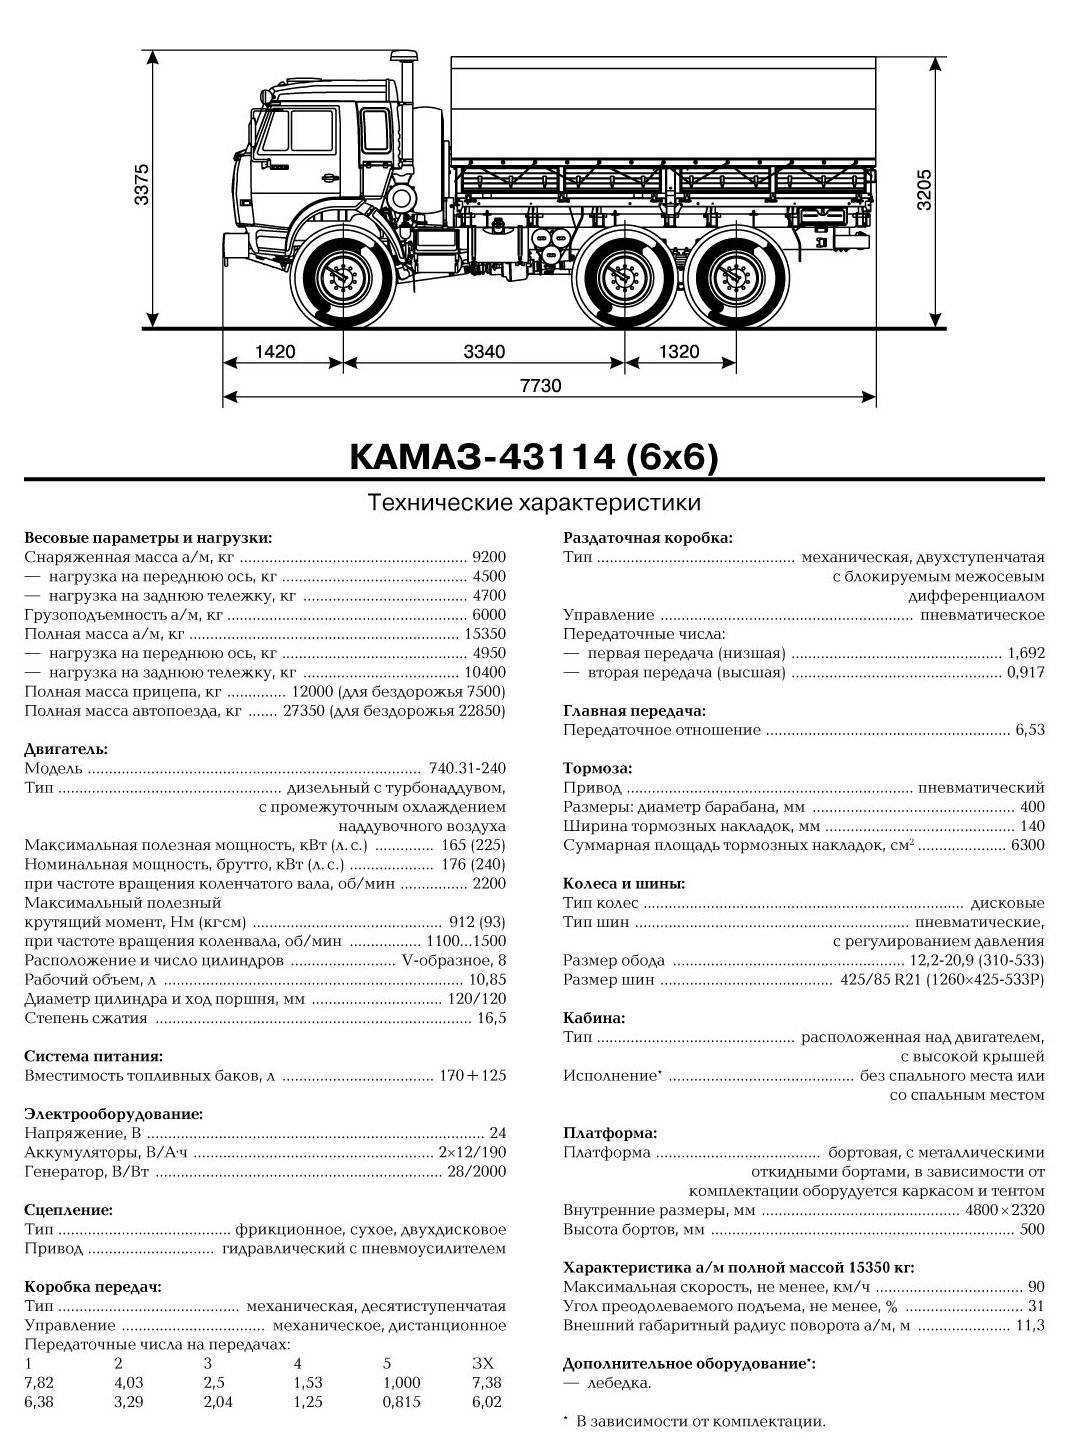 Камаз-65117: характеристики грузовика, описание и отзывы